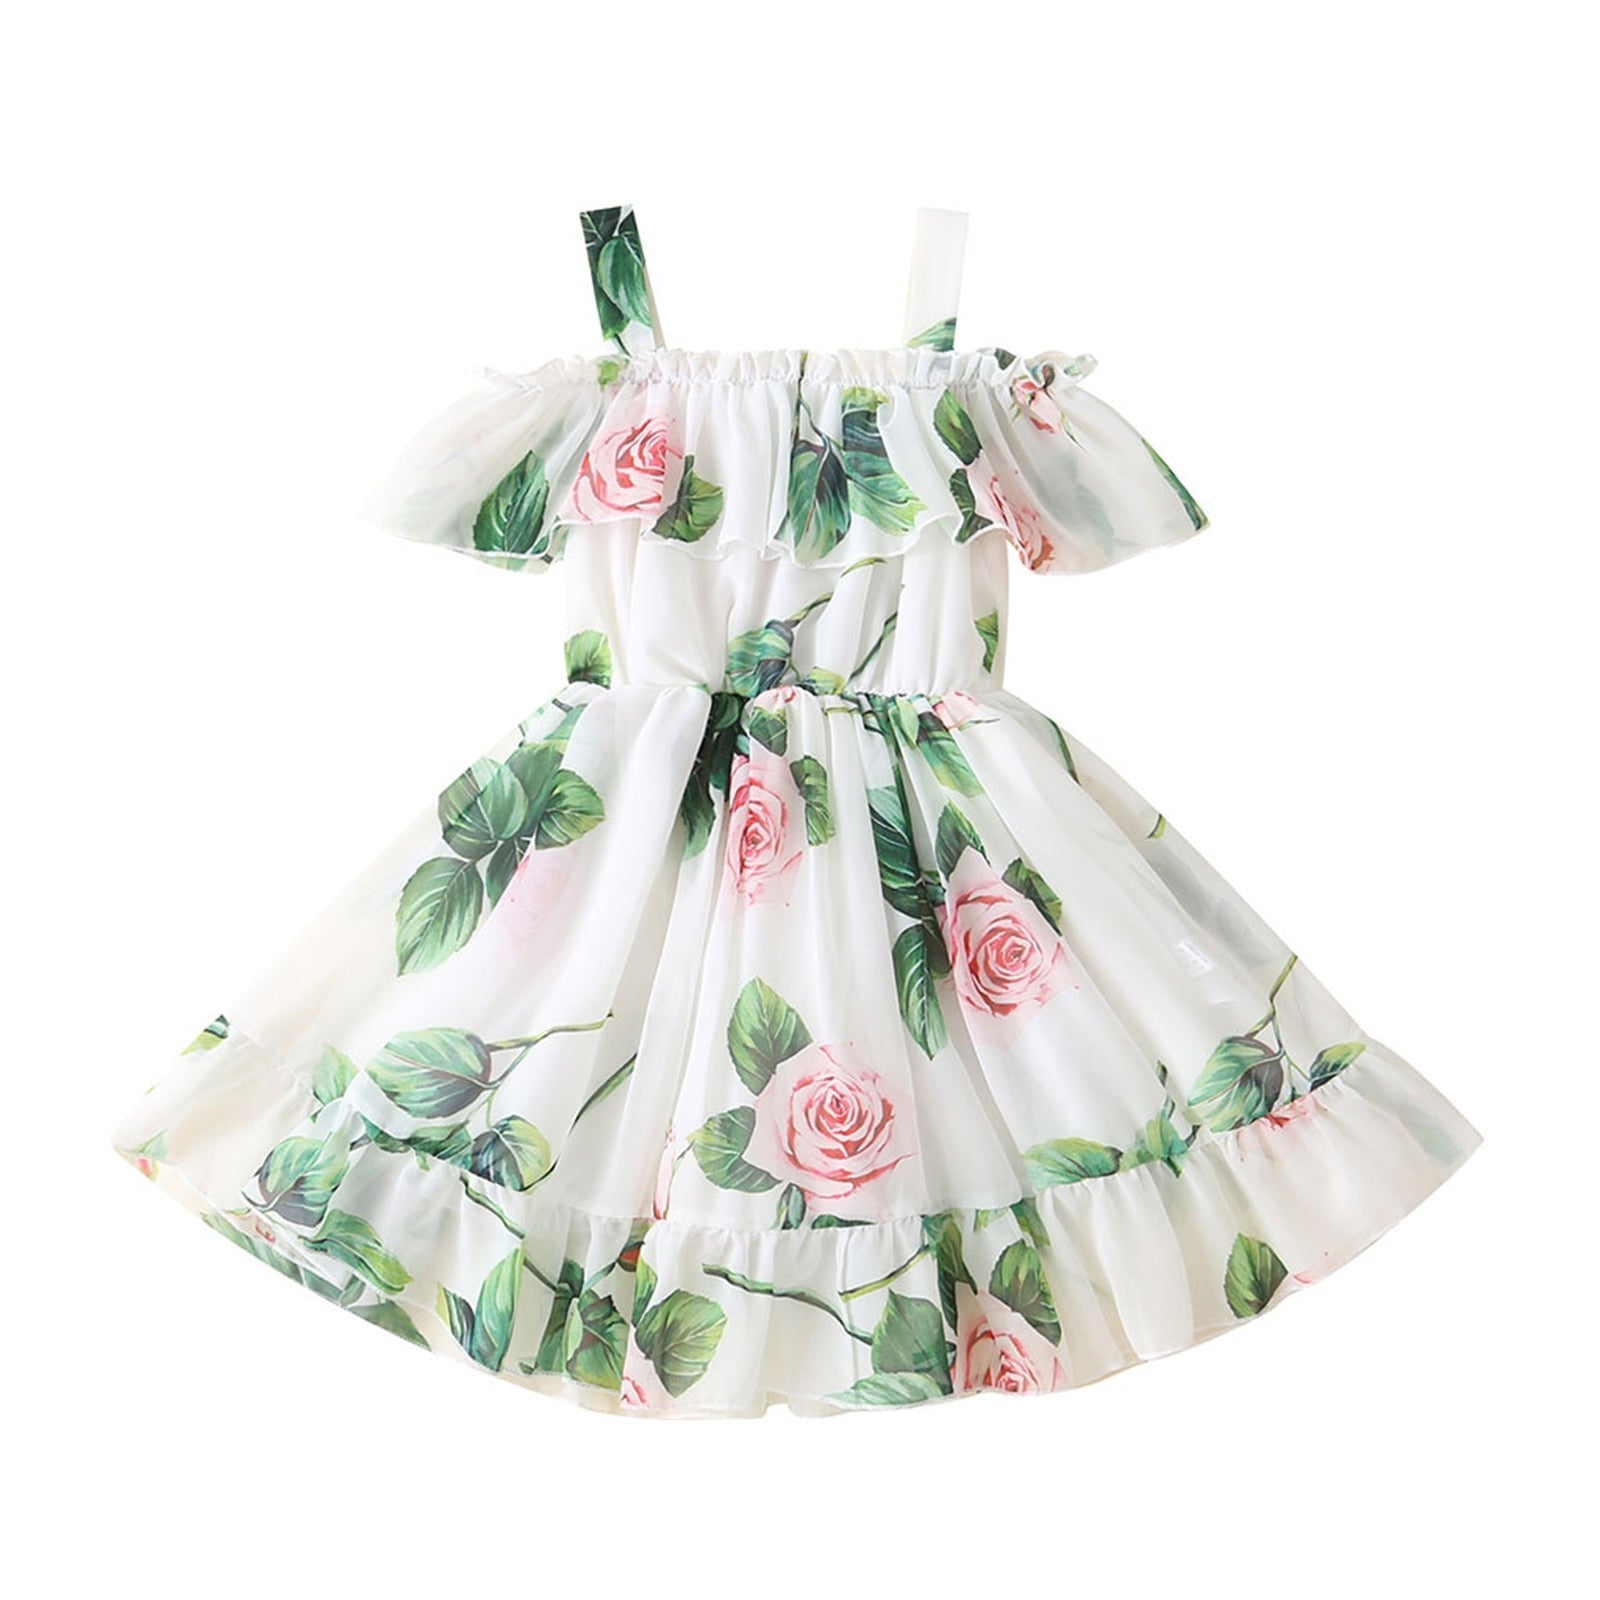 Vestido Infantil Florido vestido Loja Click Certo Branco e Rosa 18-24 meses 52cm 